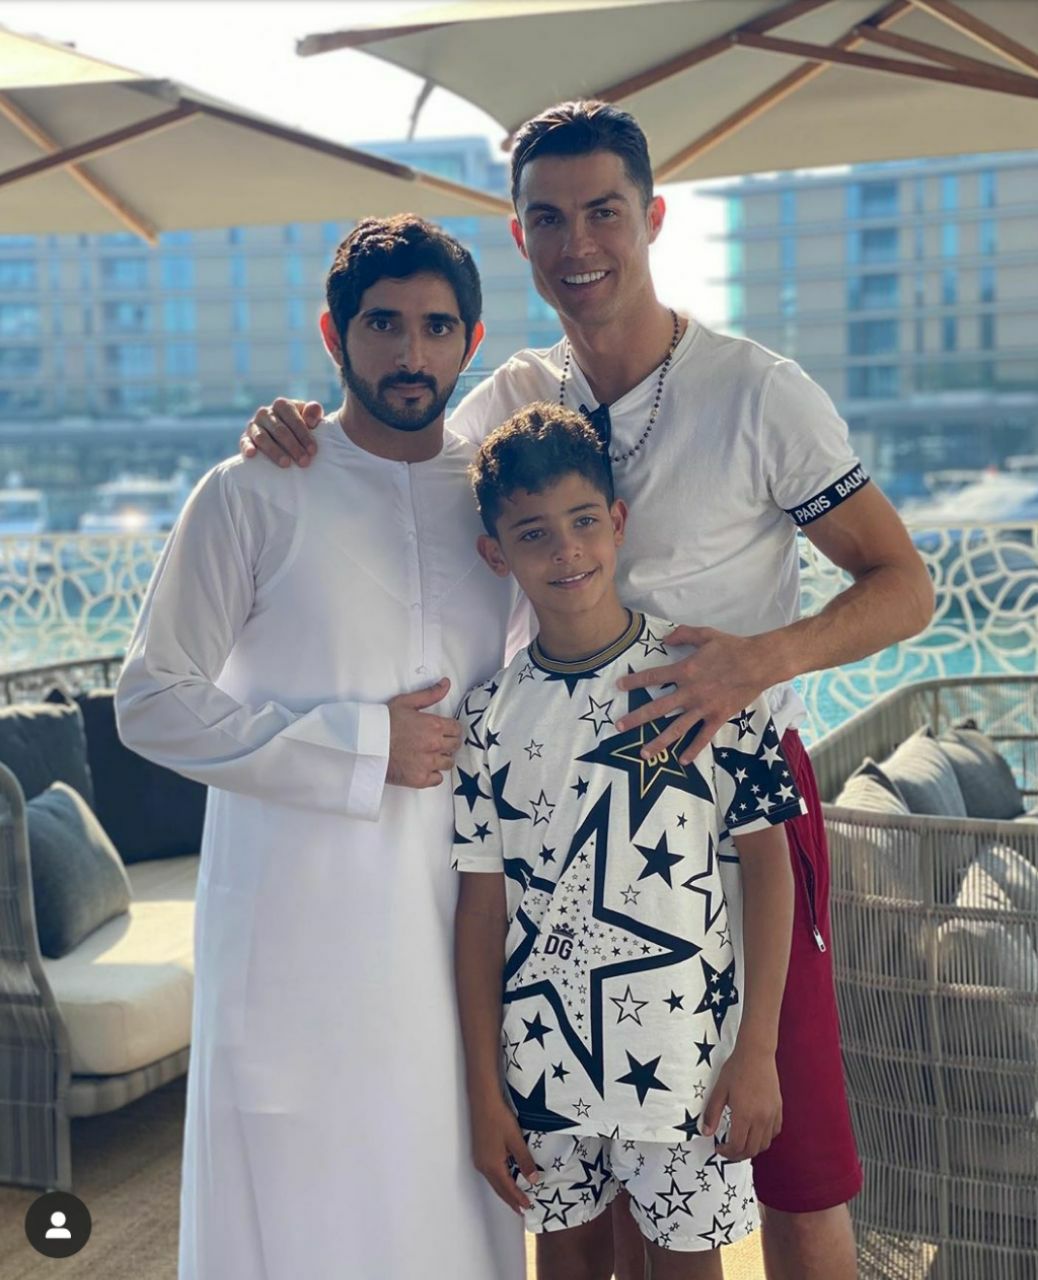 رونالدو در کنار پسر حاکم دبی + عکس